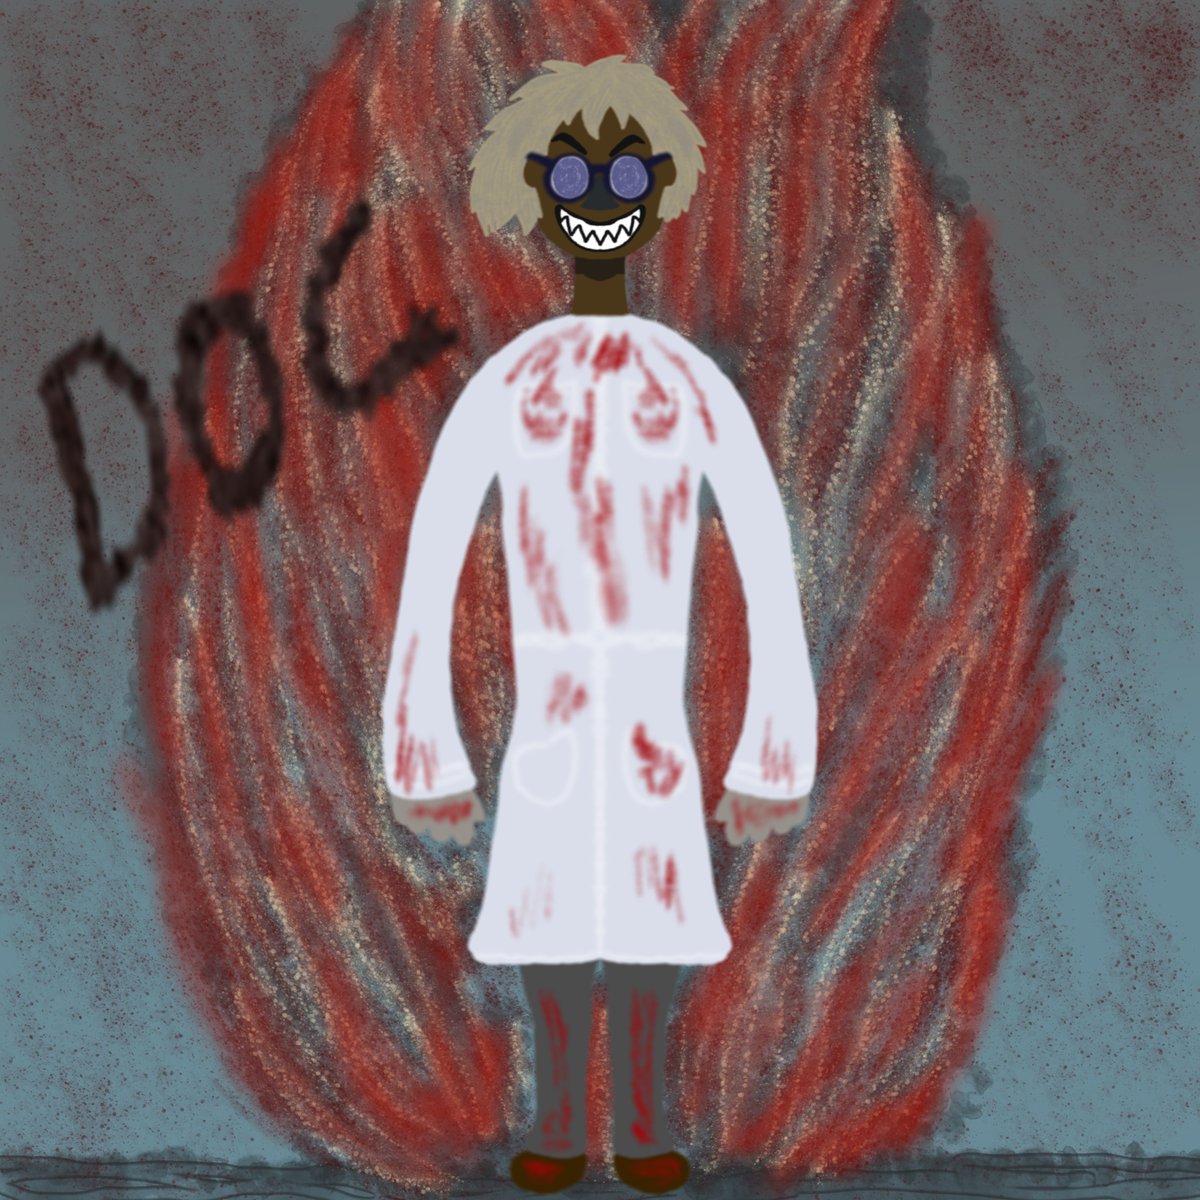 Doc the 'Collector'.
#deathtoeerick #horrorgame #horrorgames #visualnovel #creepy #HorrorCommunity #visualnovels #indiegames #indiegamedeveloper